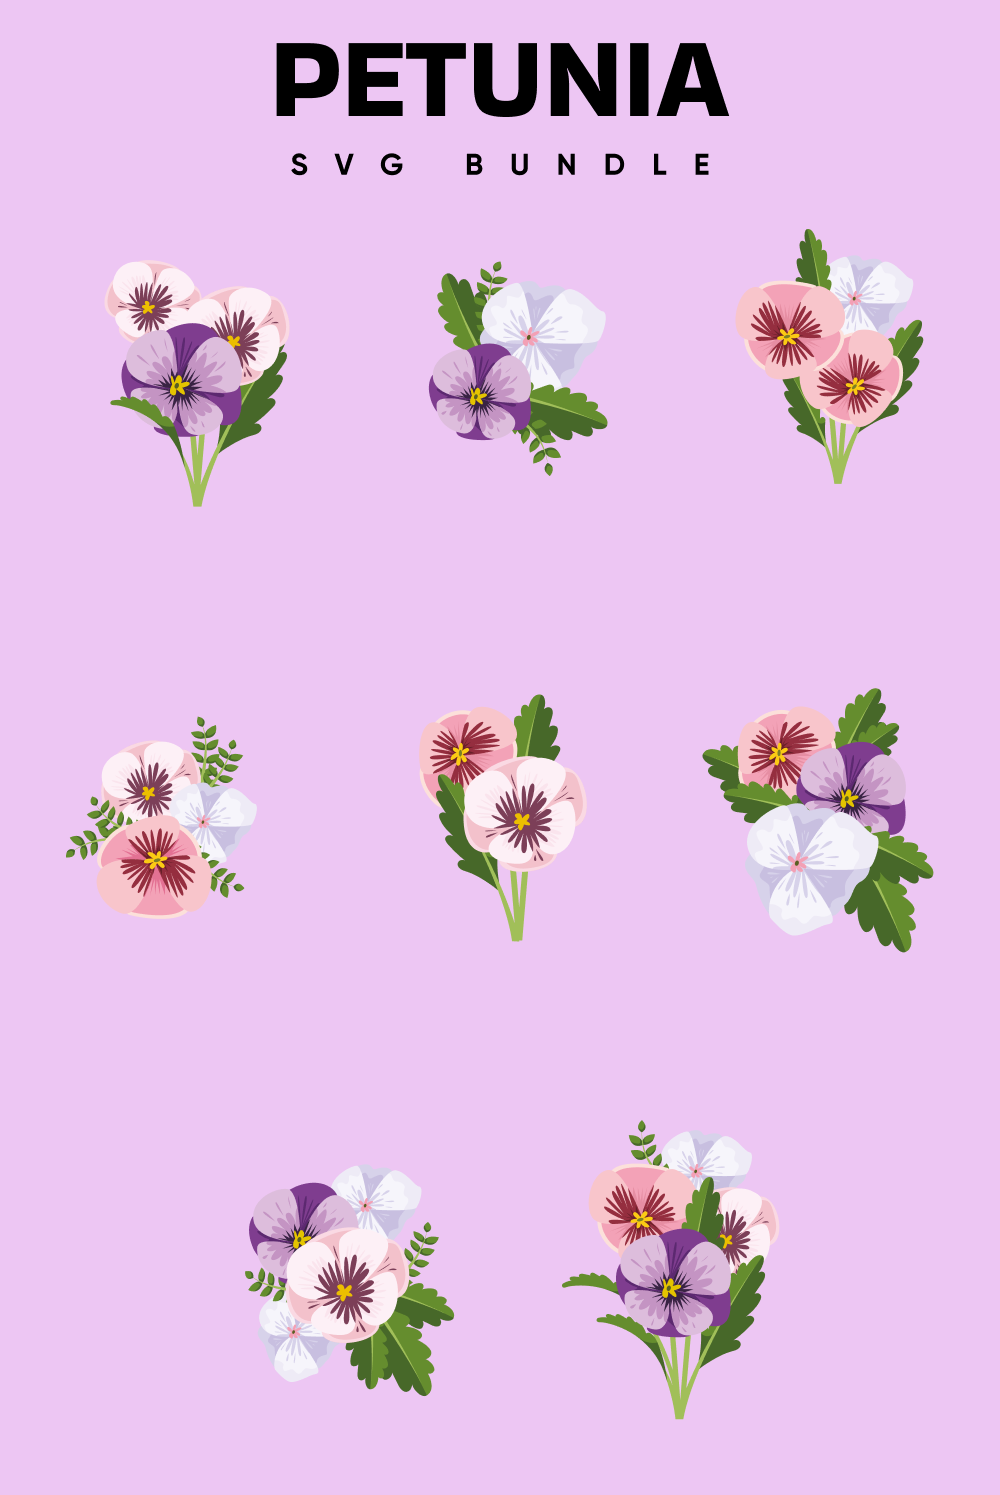 Illustrations of pinterest petunia bundle.